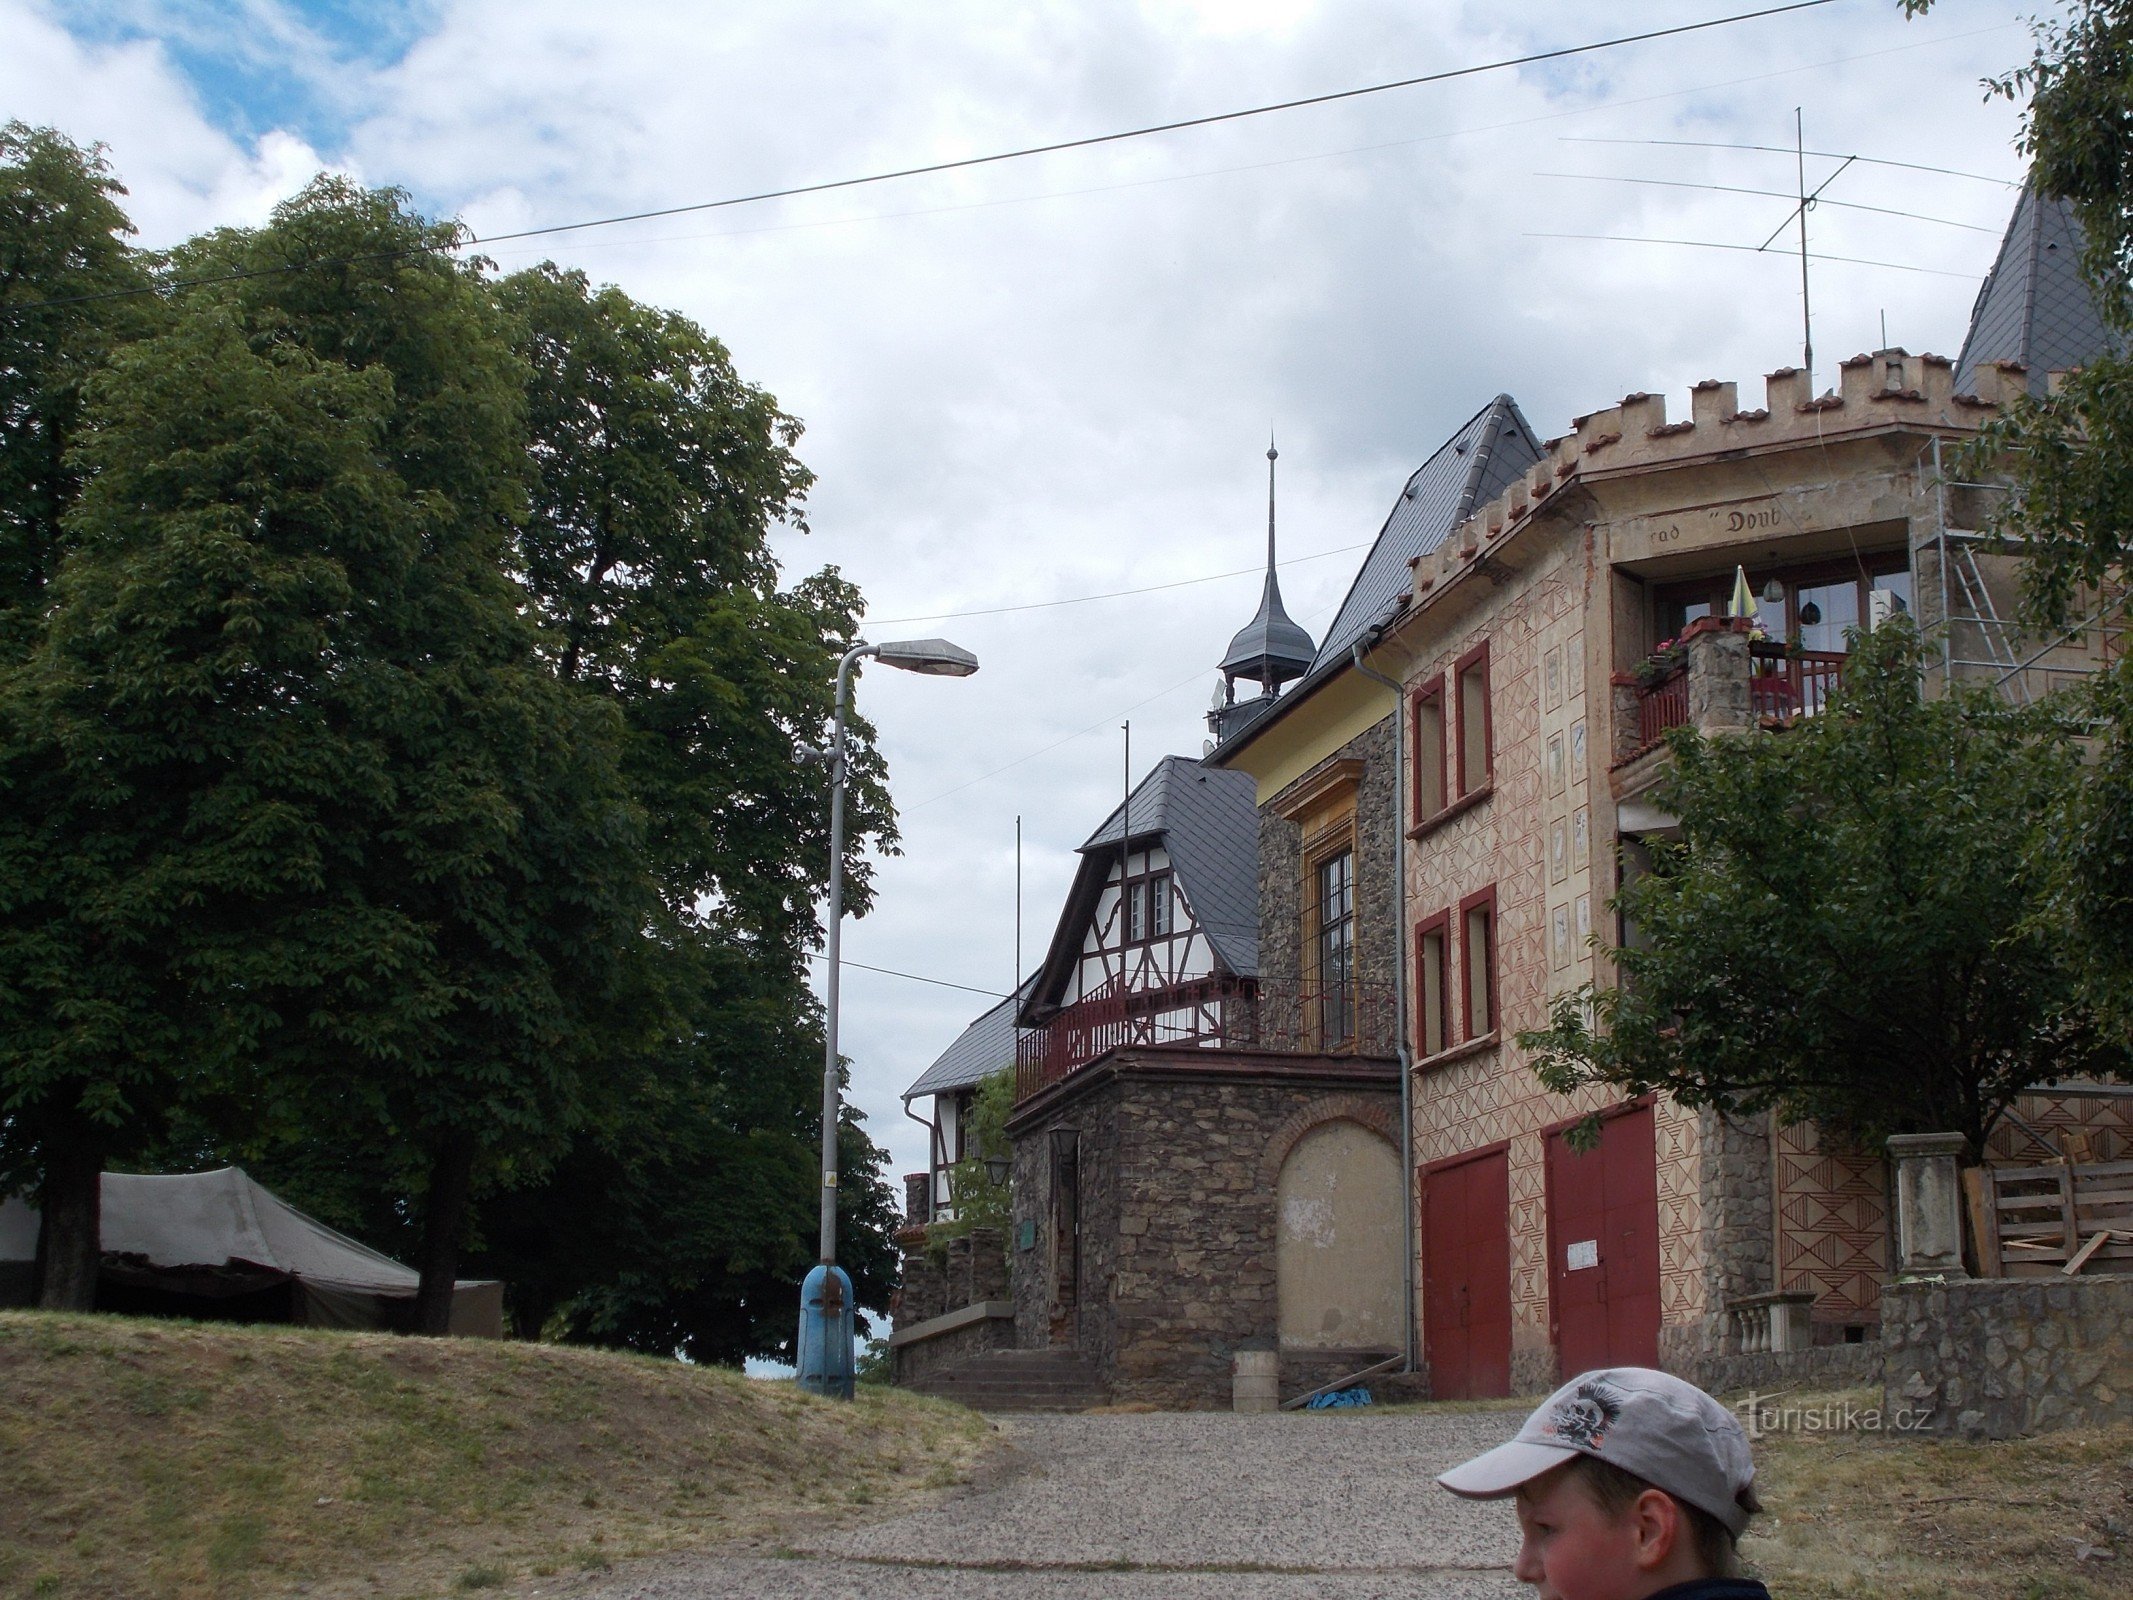 Doubravka slott